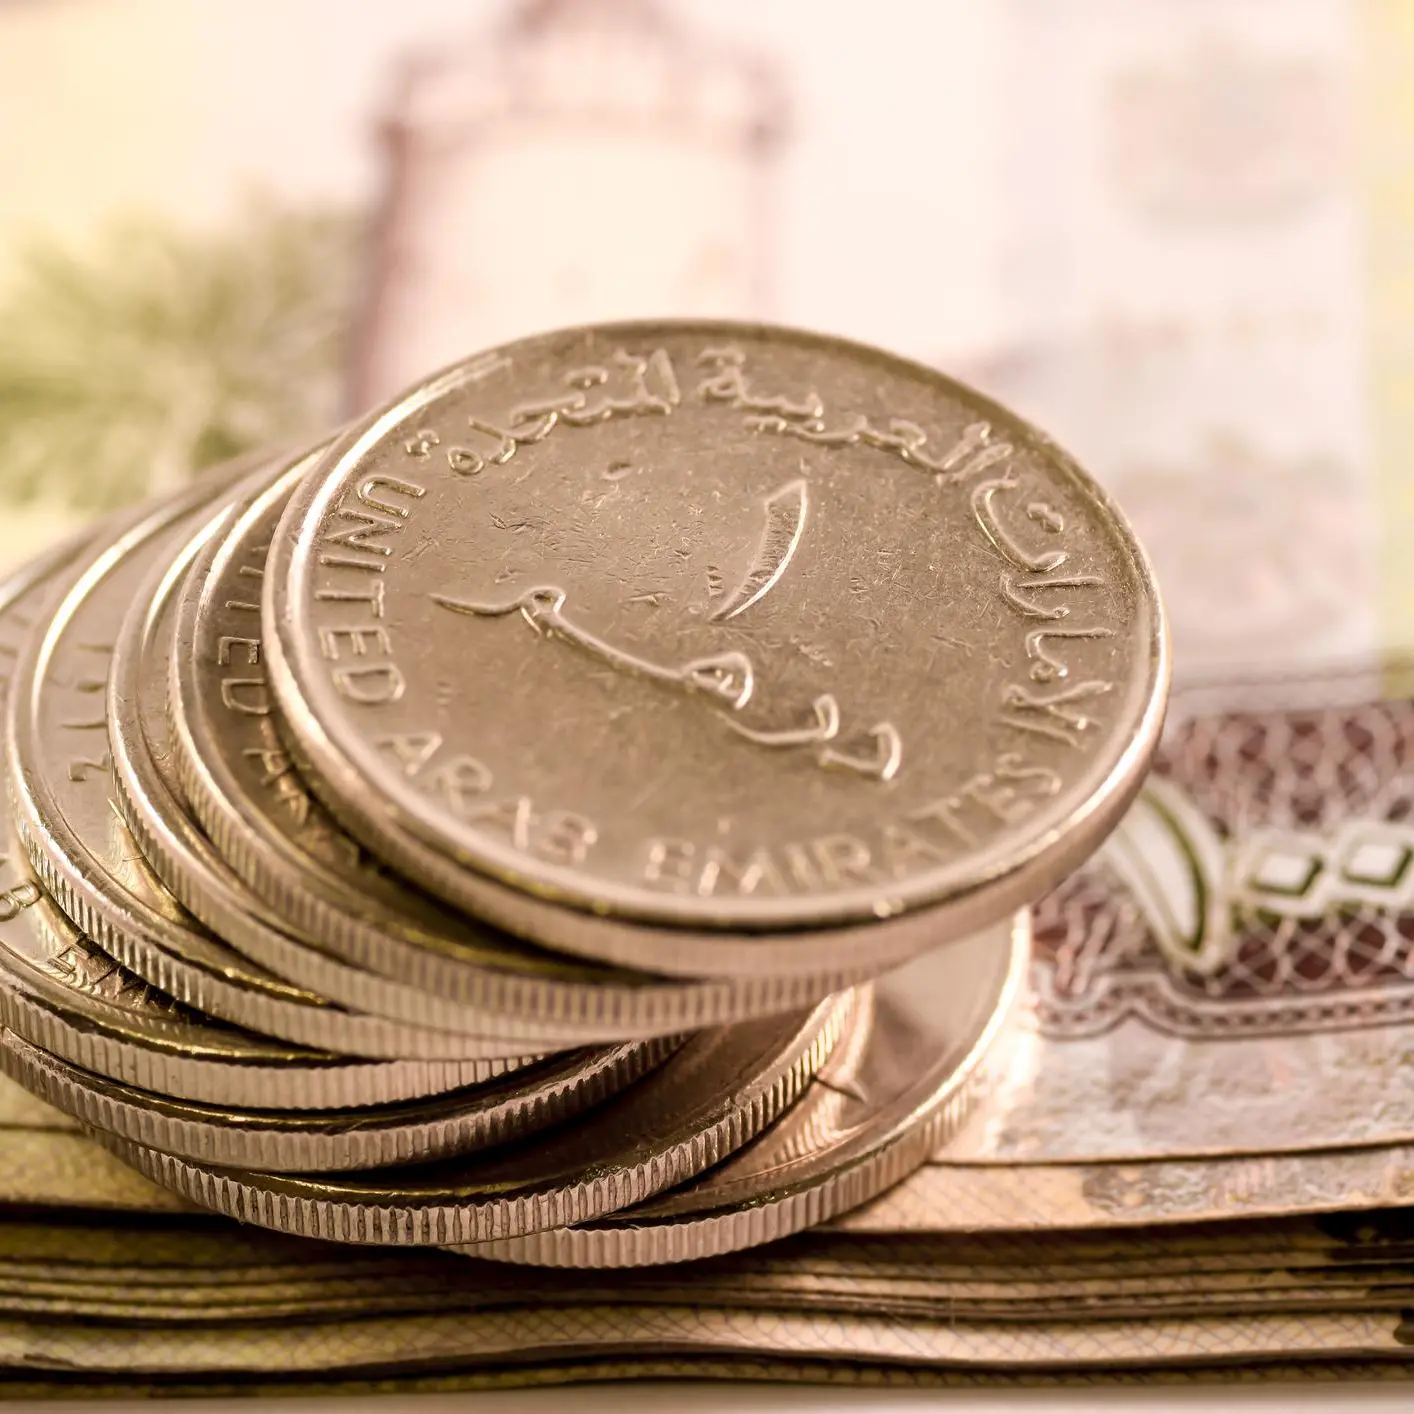 UAE’s pension scheme is ranked 23rd worldwide